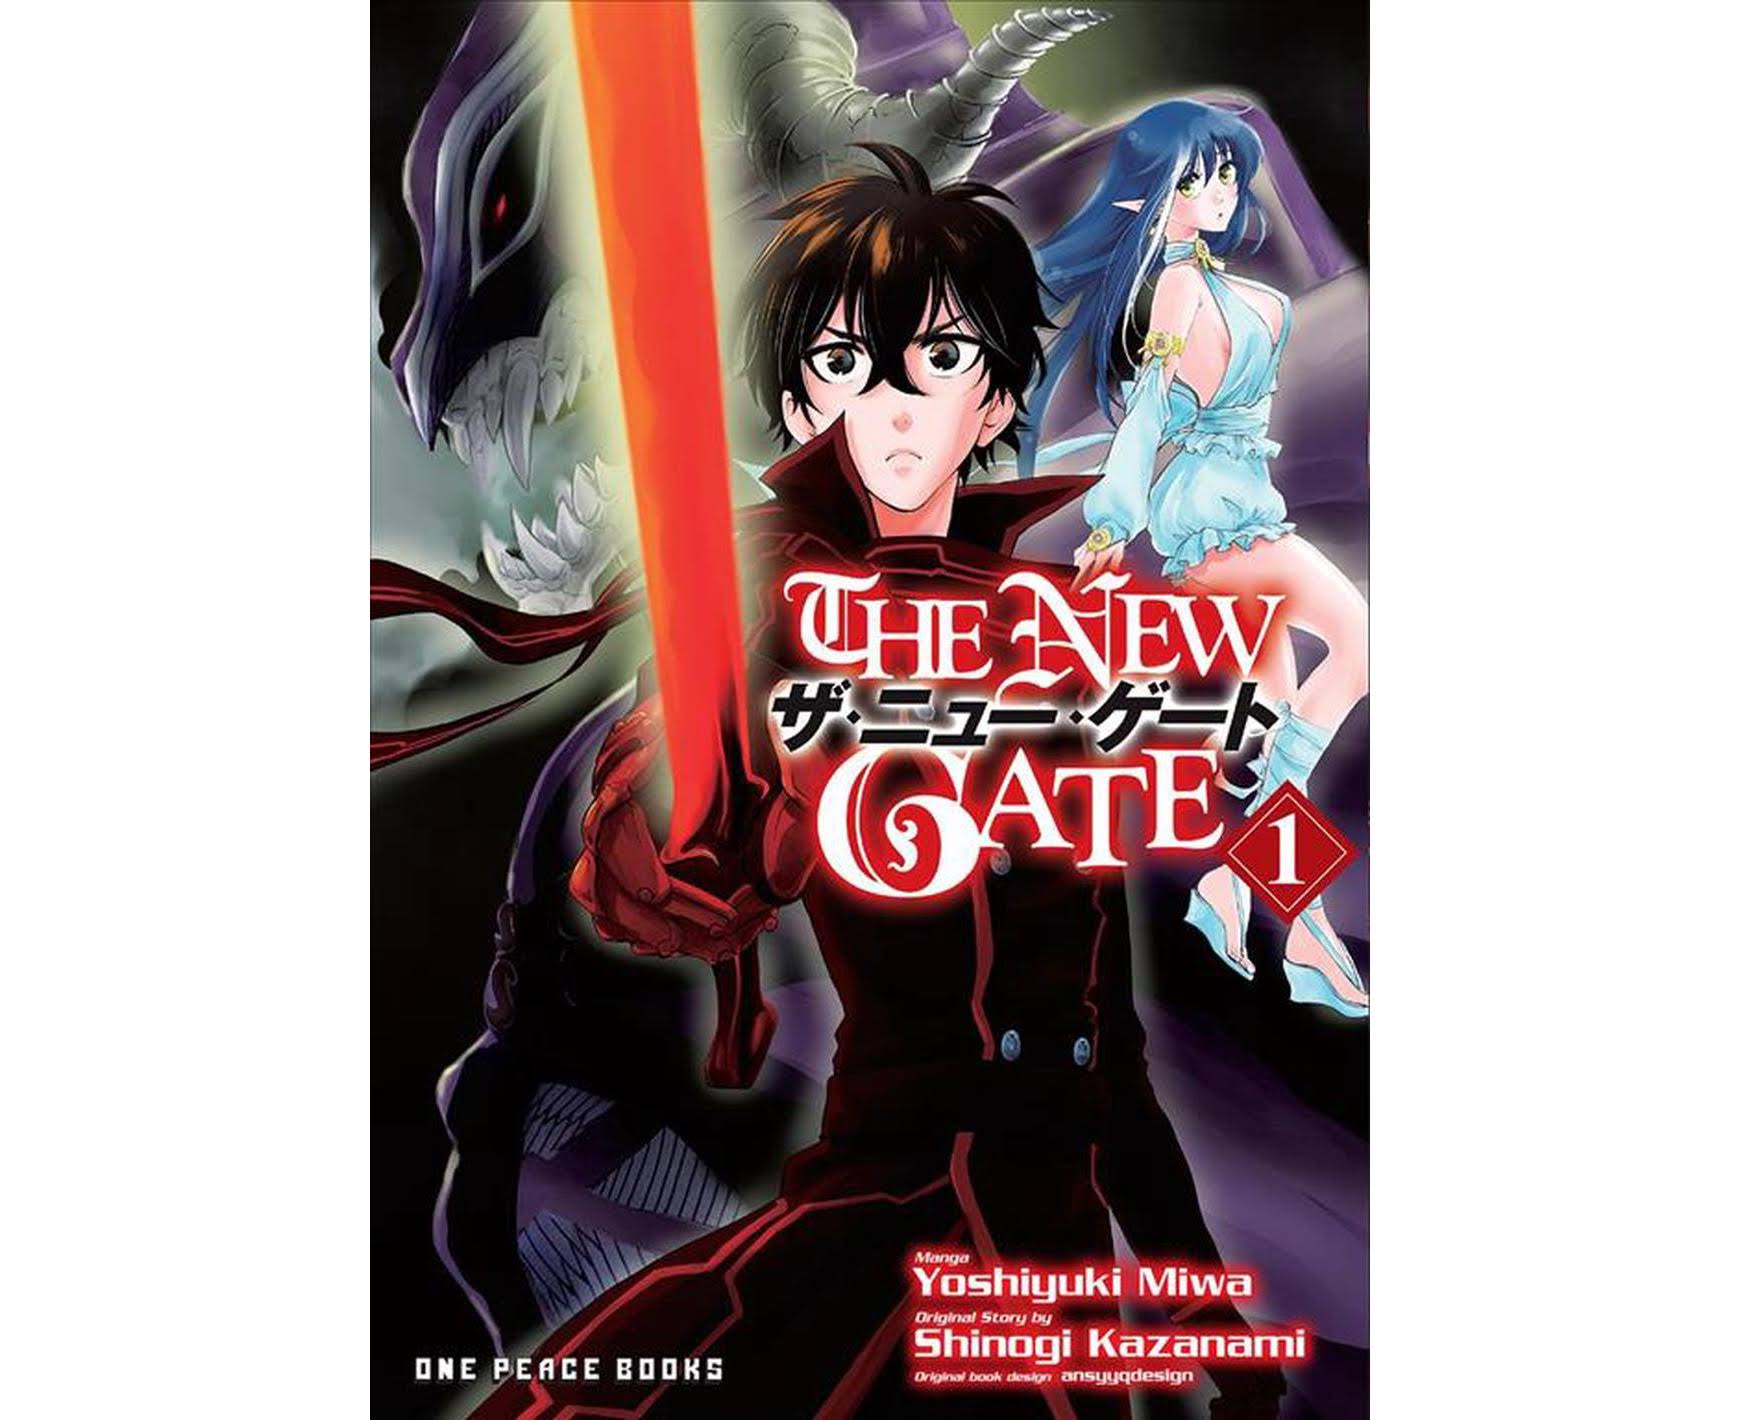 The New Gate Volume 1 by Yoshiyuki Miwa